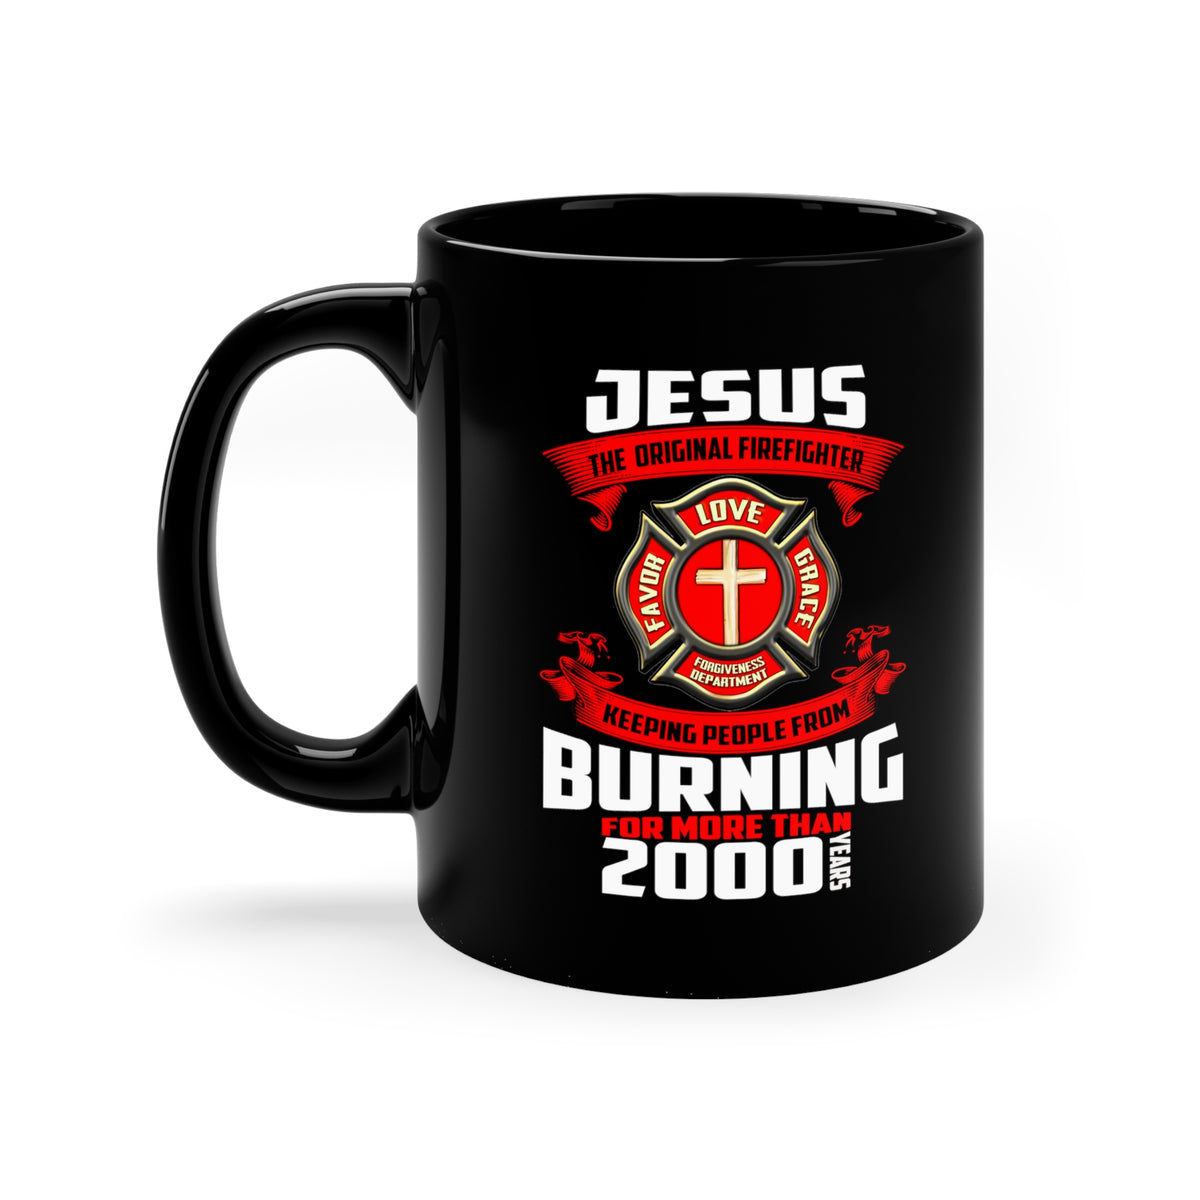 Firefighter Mugs / Proud Firefighter Mugs